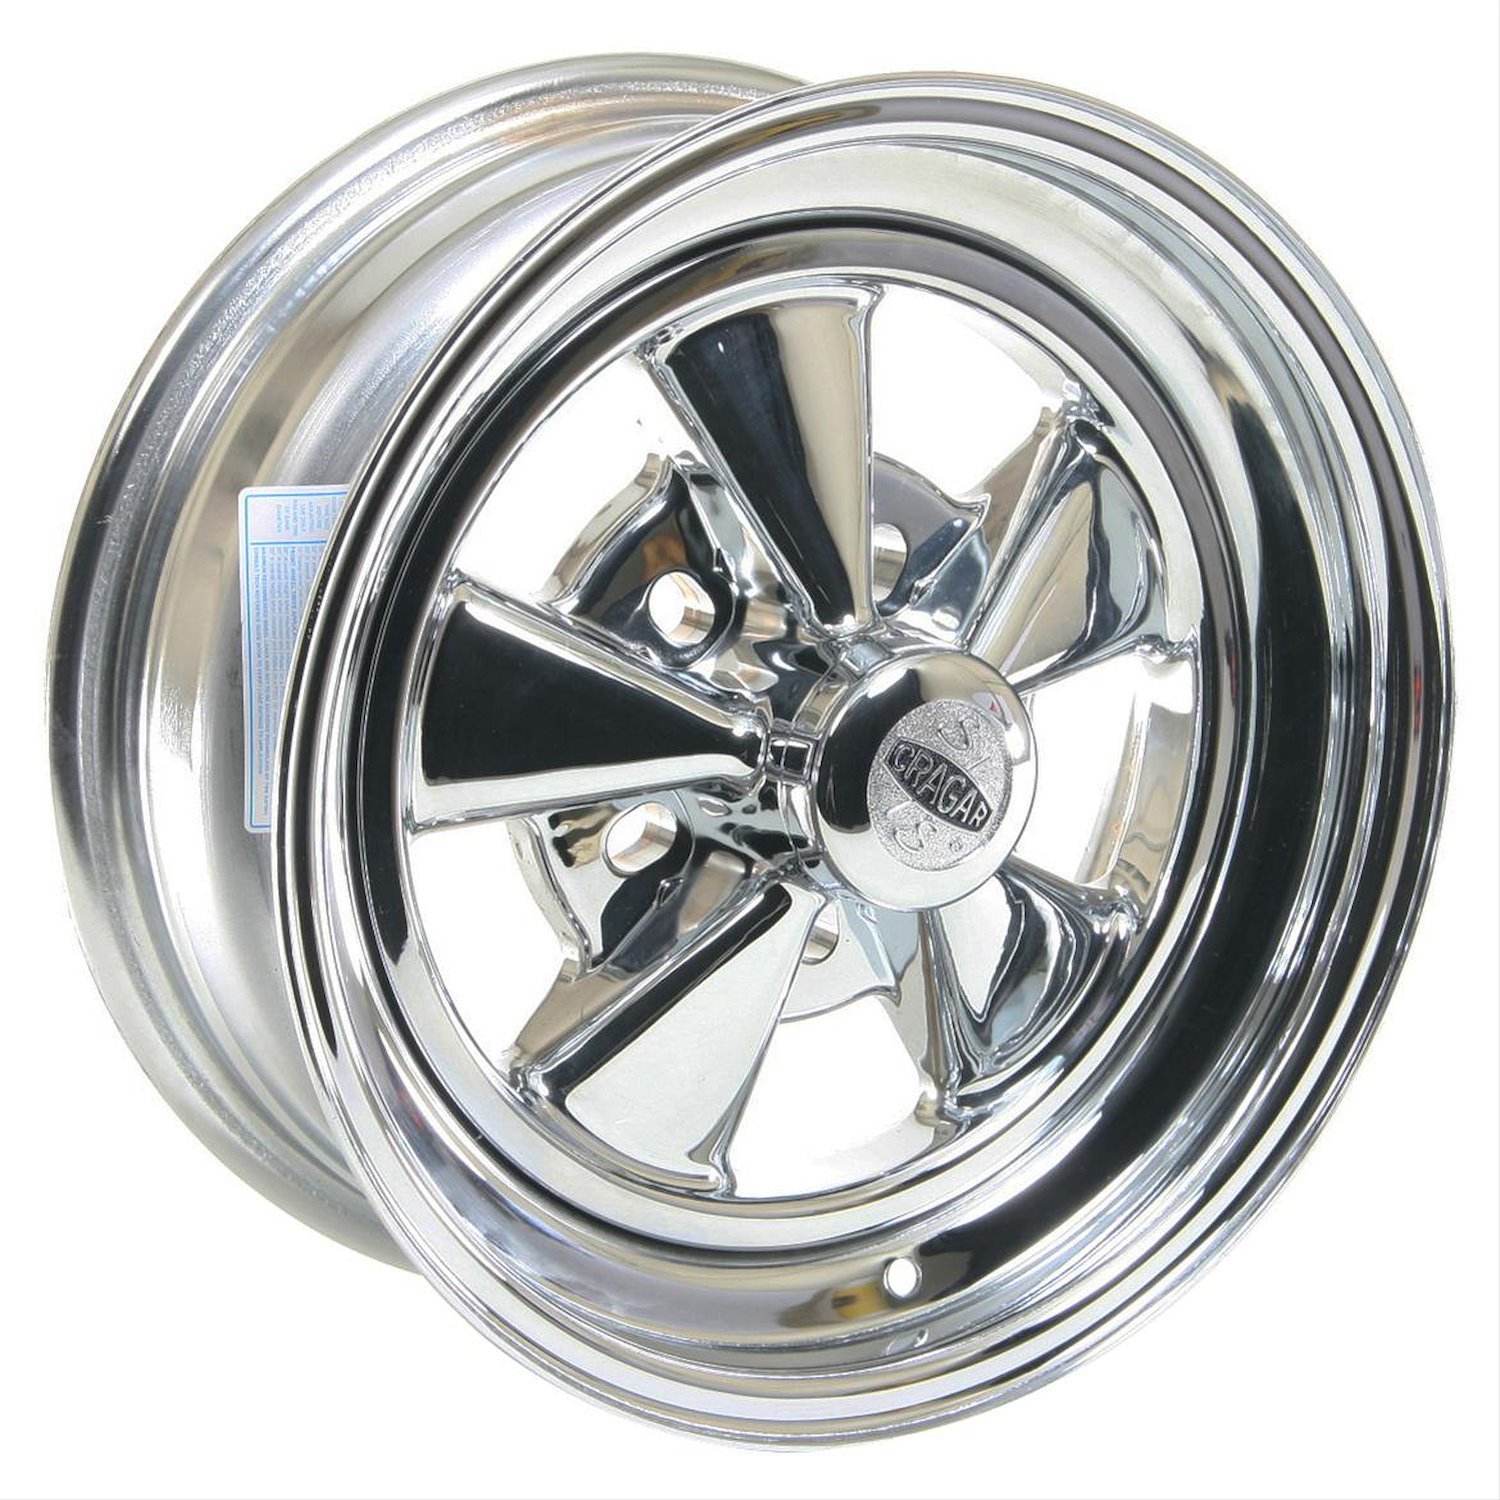 61615 08/61 Series Super Sport Wheel Size: 15" x 6"